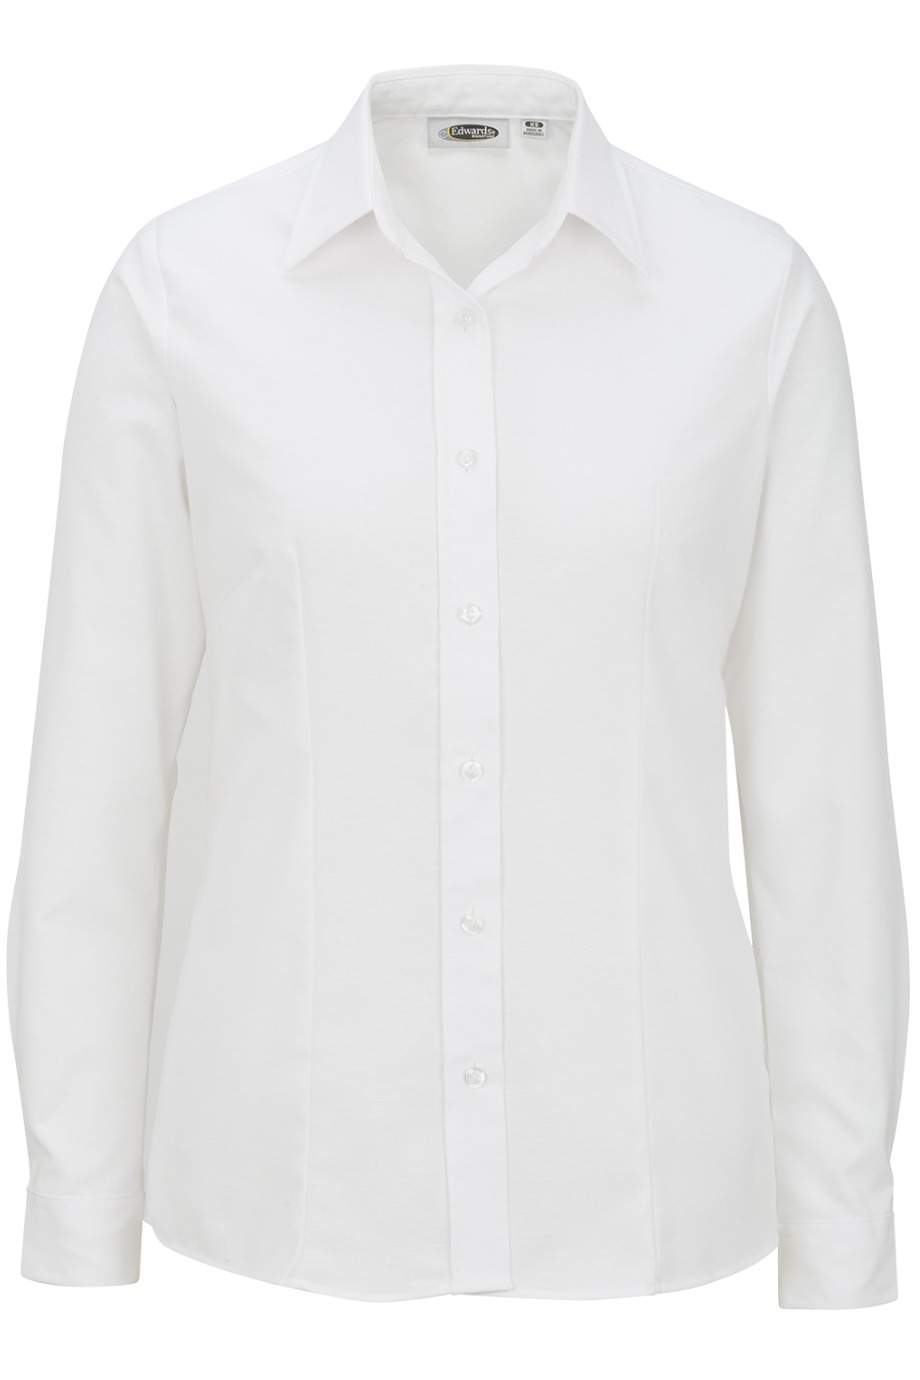 Edwards Garment 5078 - Oxford Long Sleeve Shirt